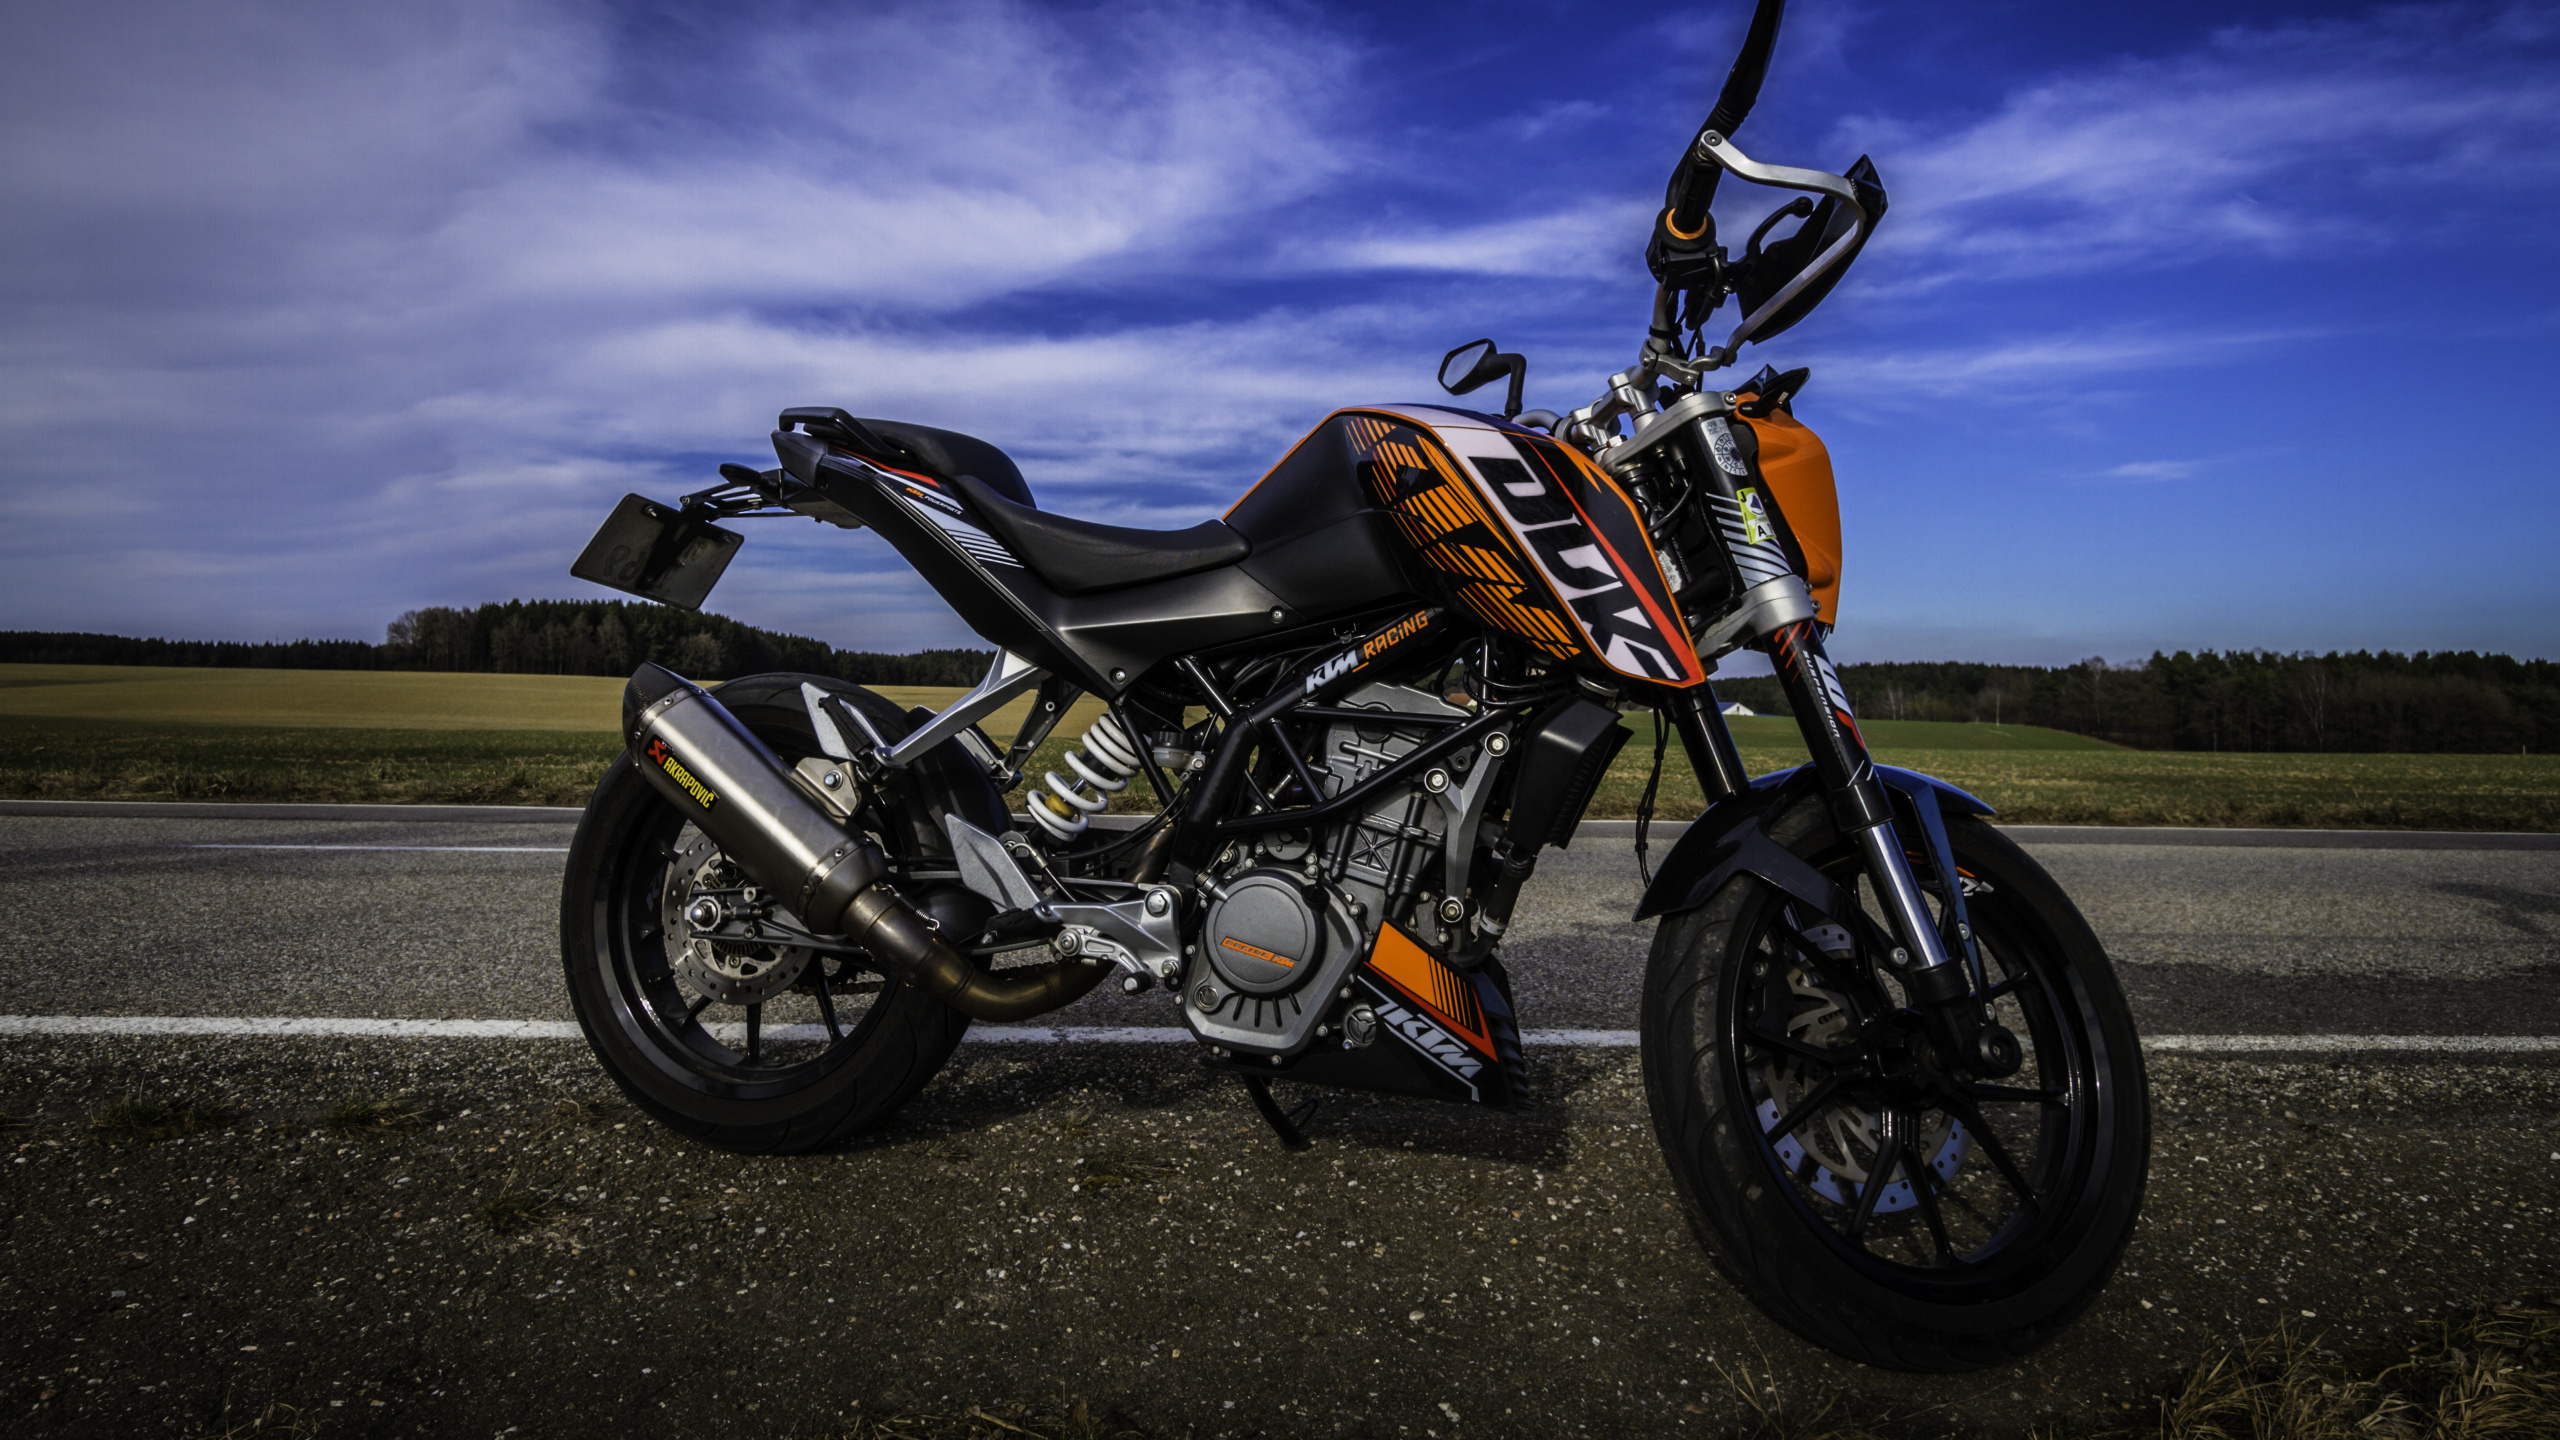 Orange and Black Motorcycle on Black Asphalt Road Under Gray Cloudy Sky. Wallpaper in 2560x1440 Resolution